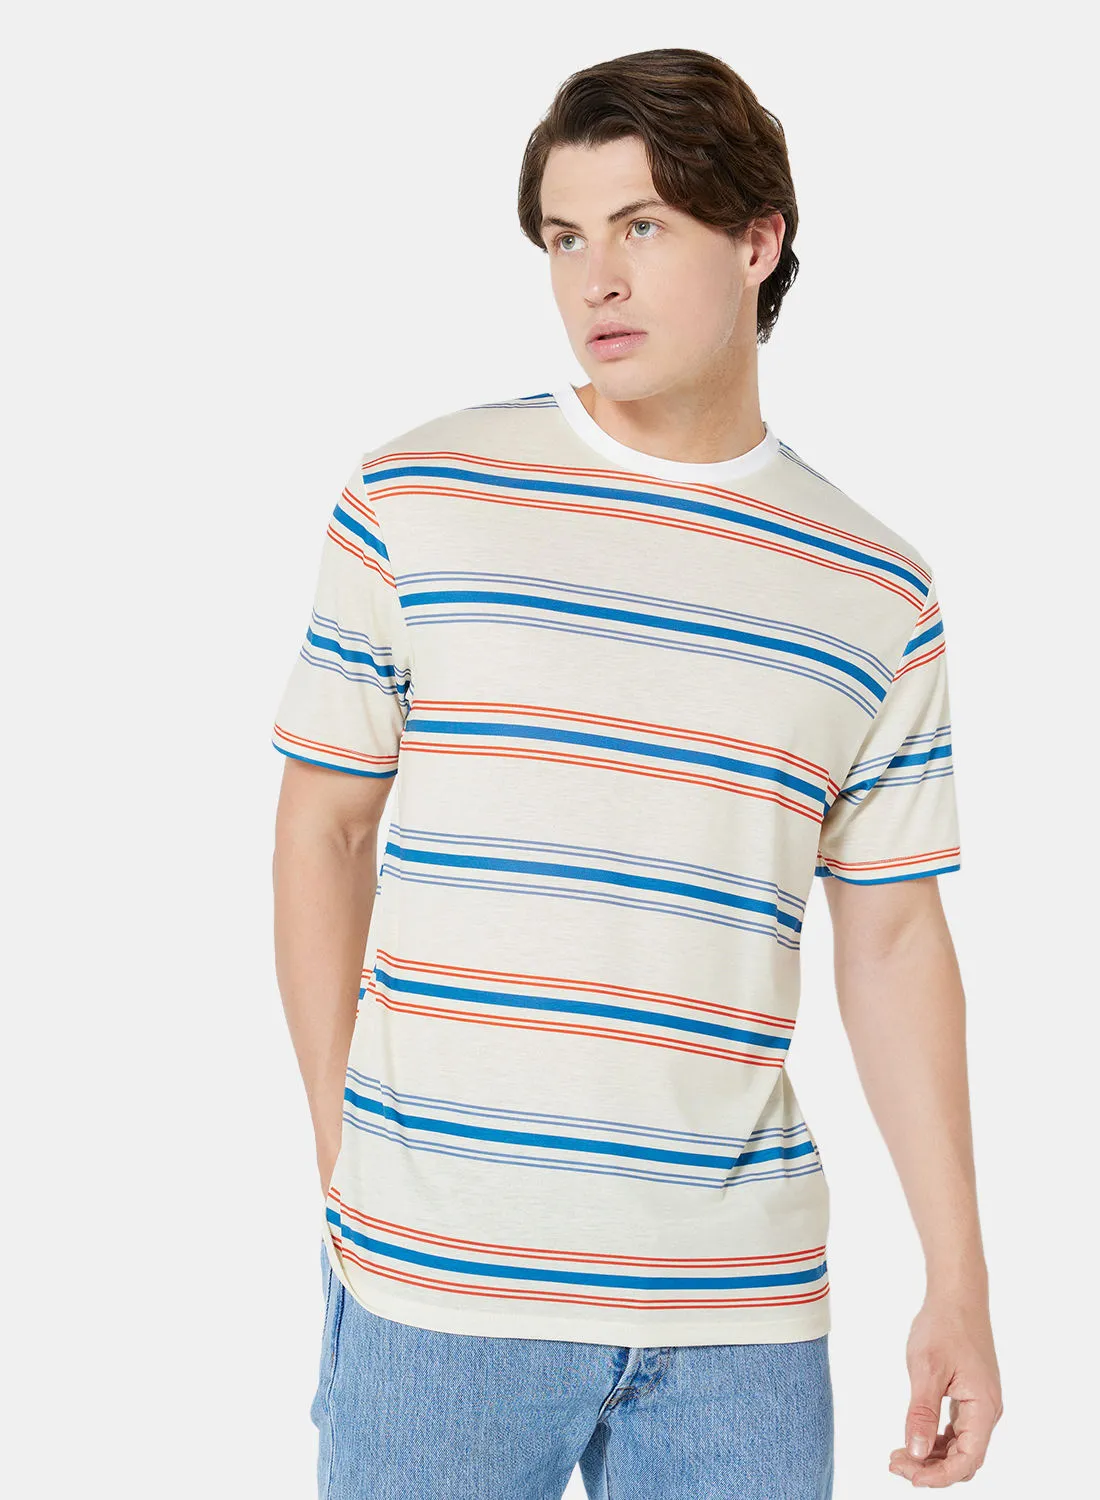 STATE 8 Stripe Print T-Shirt أبيض أوف وايت